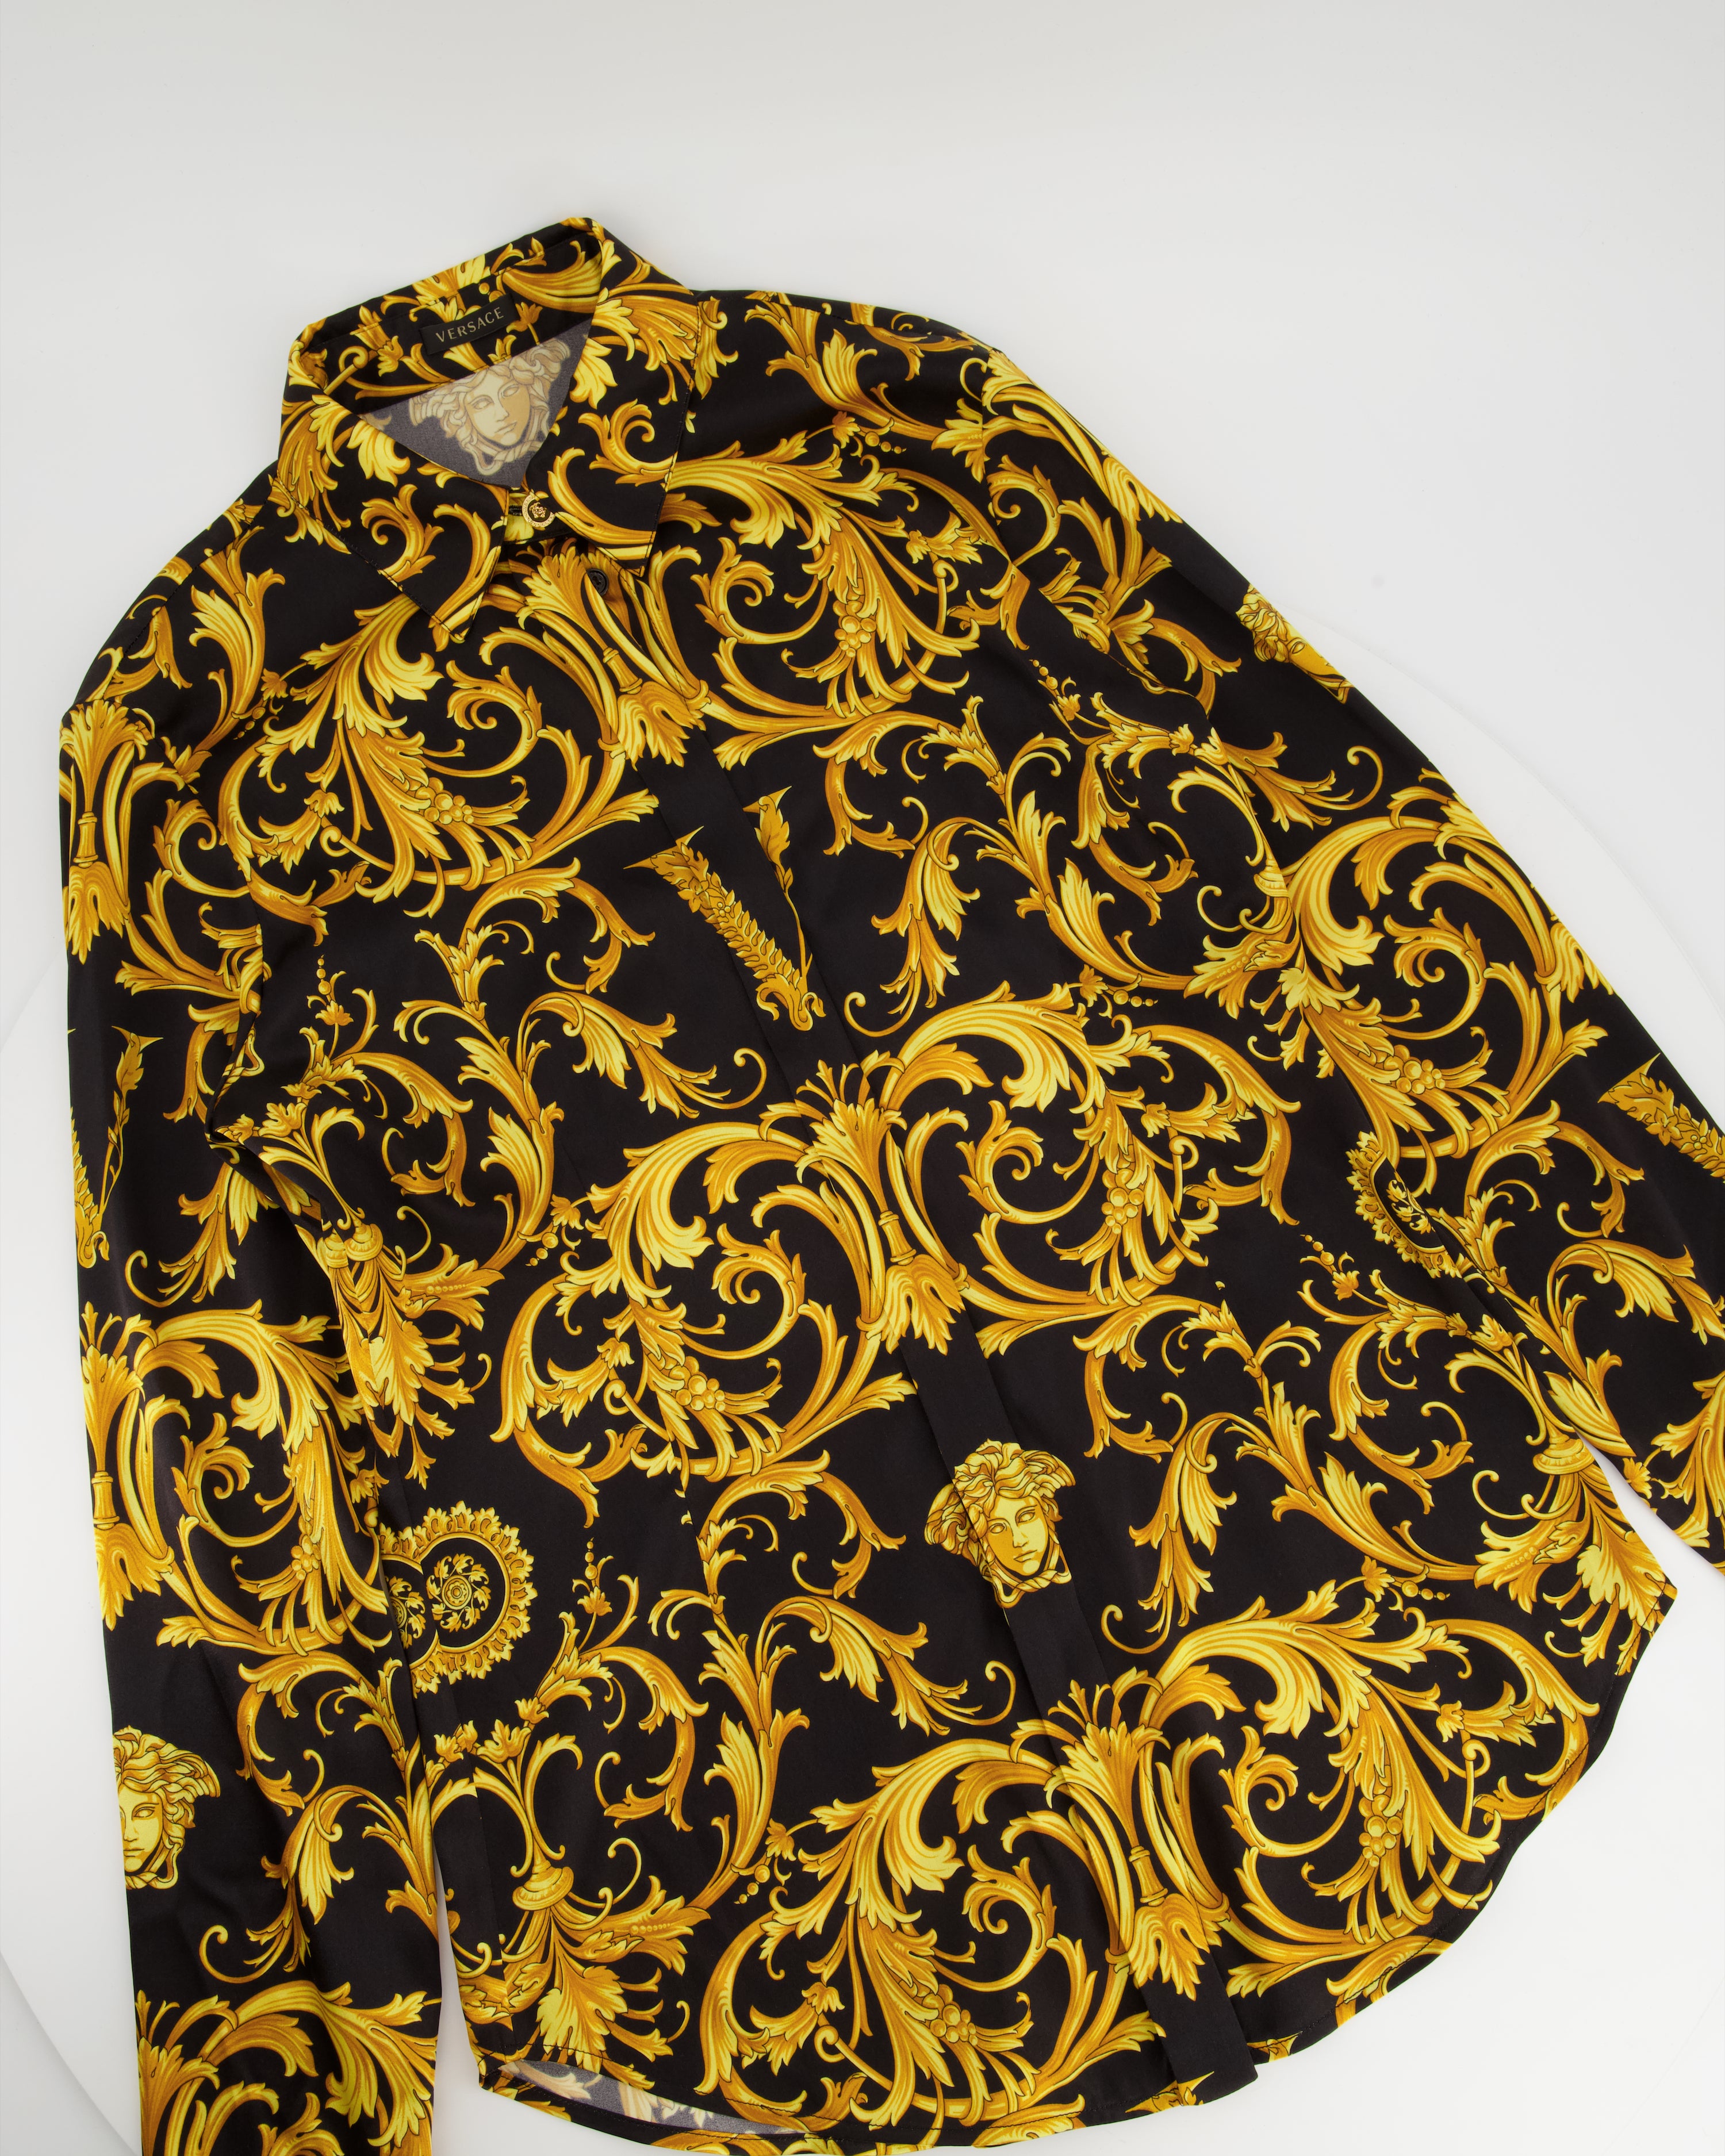 Versace Black and Gold Brocade Printed Silk Shirt Size IT 38 (UK 6